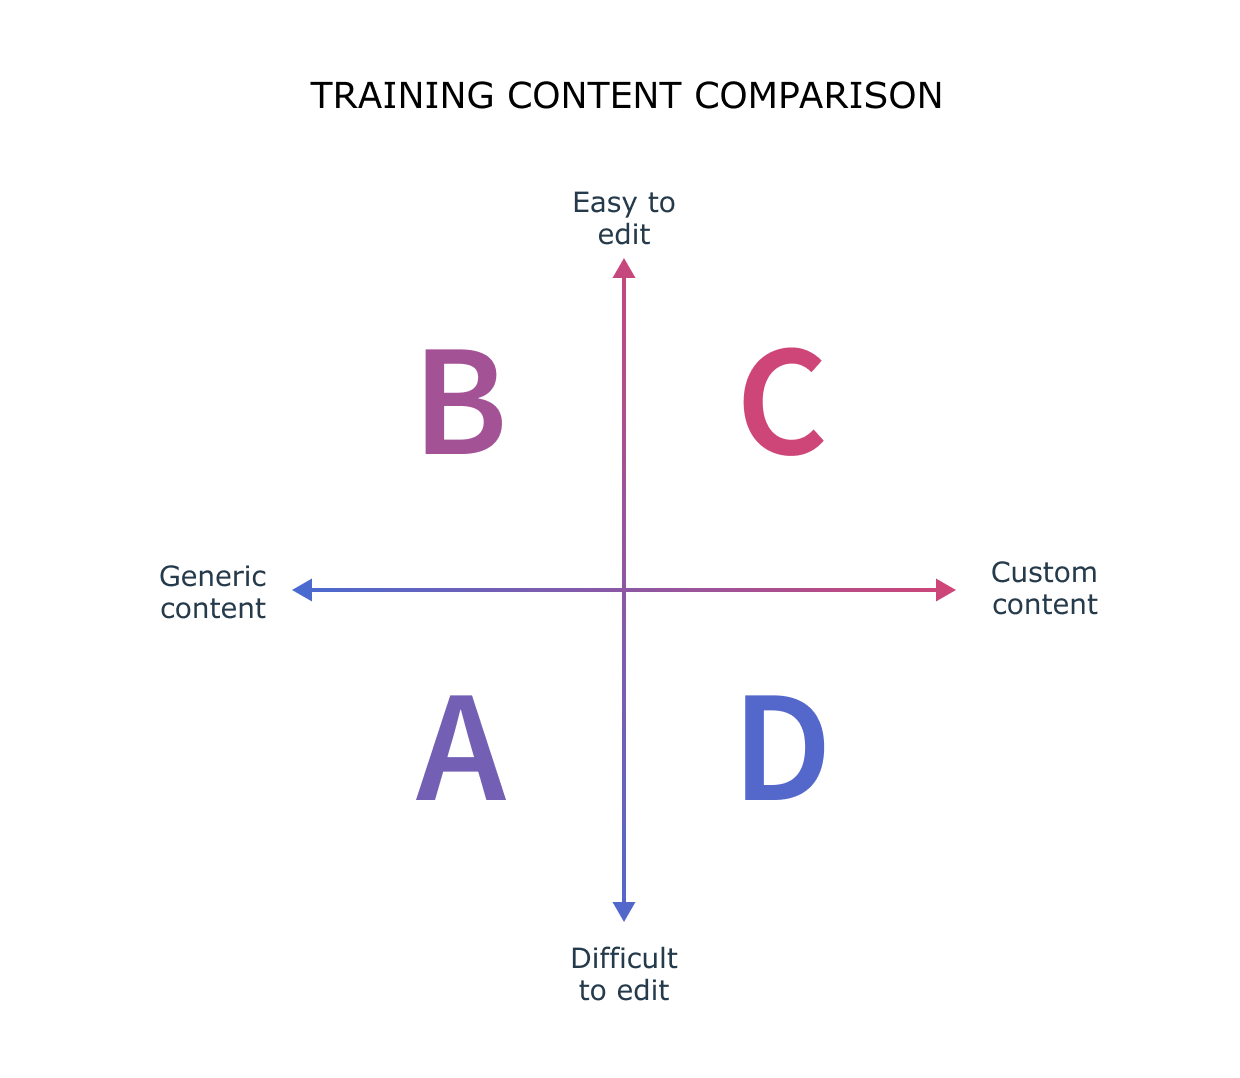 Compliance training content comparison: generic vs custom